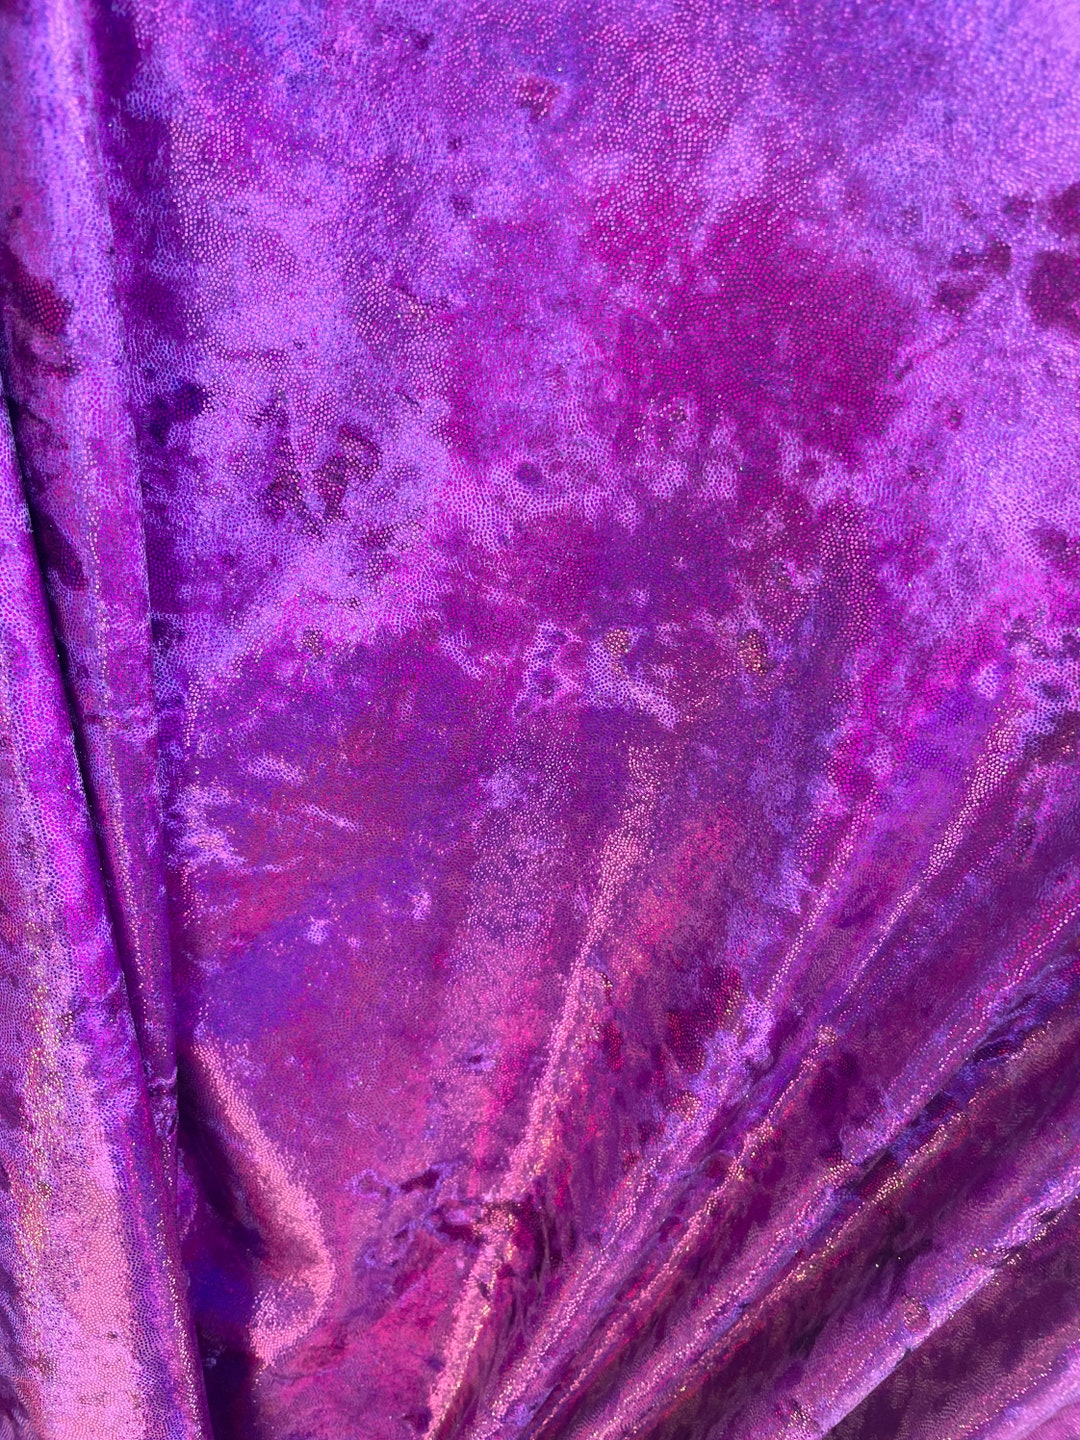 Purple Iridescent Foggy Shiny Foil Metalic on Spandex Fabric Sold